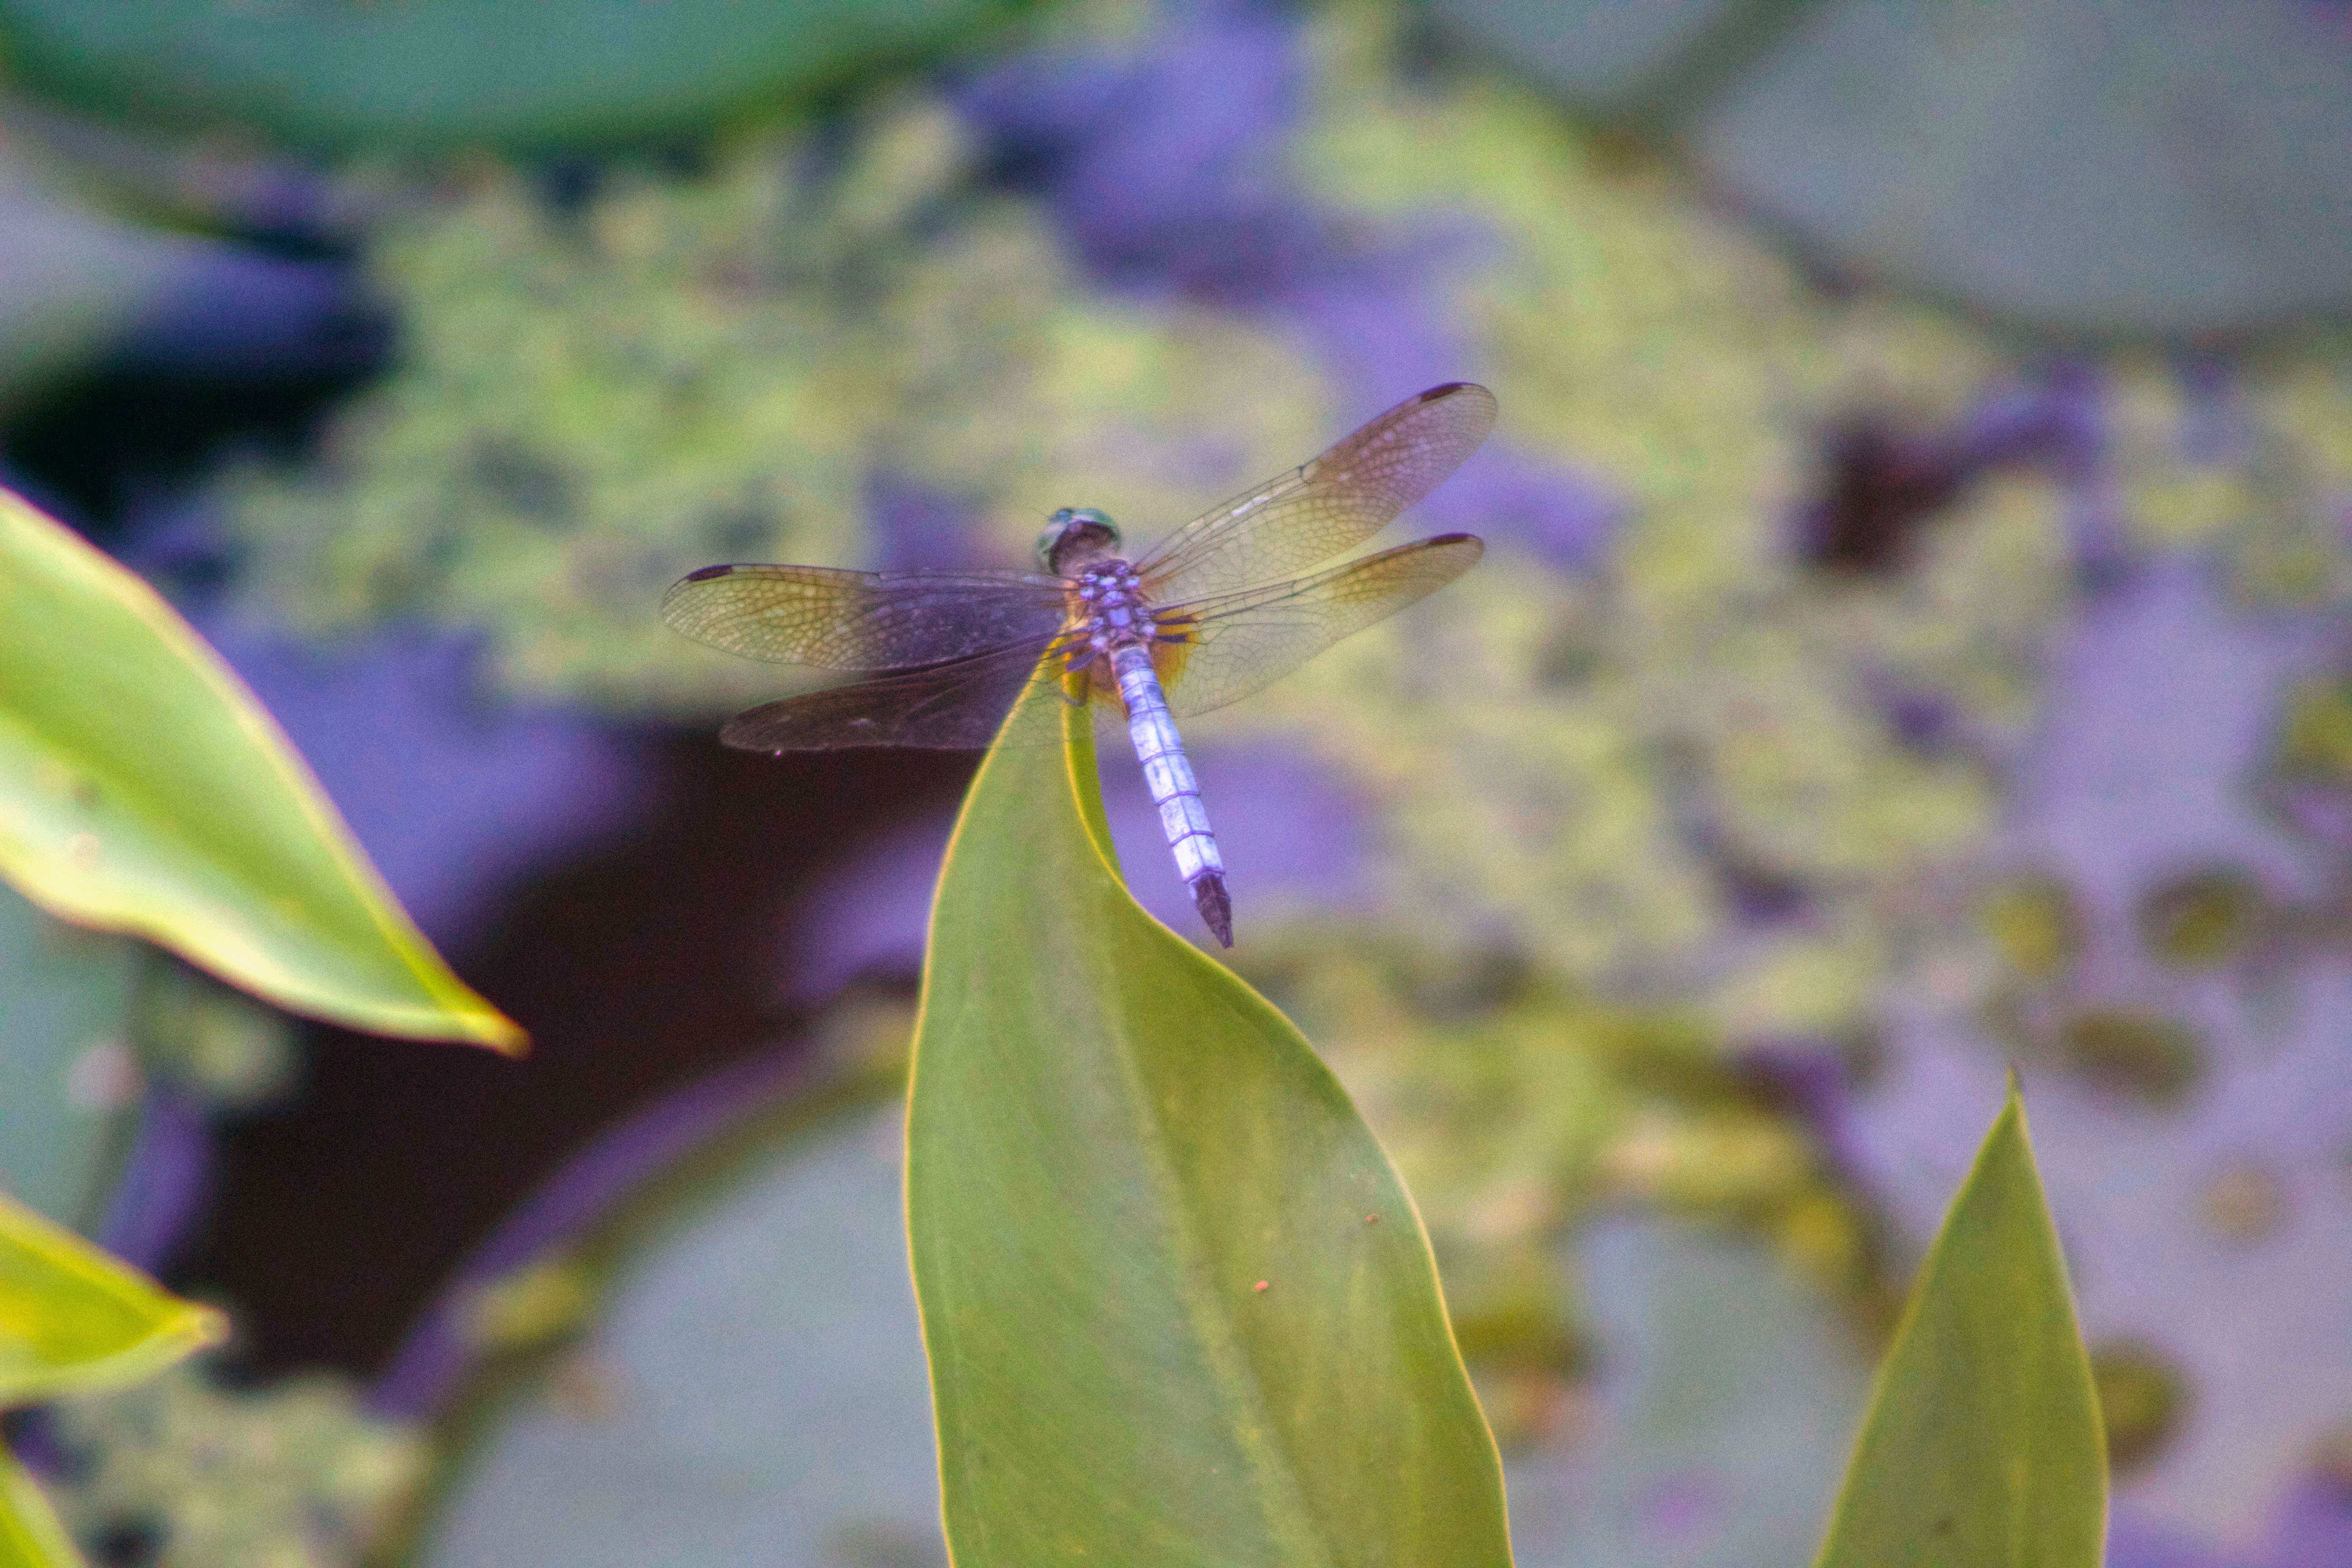 _dragonfly tip green leaf2